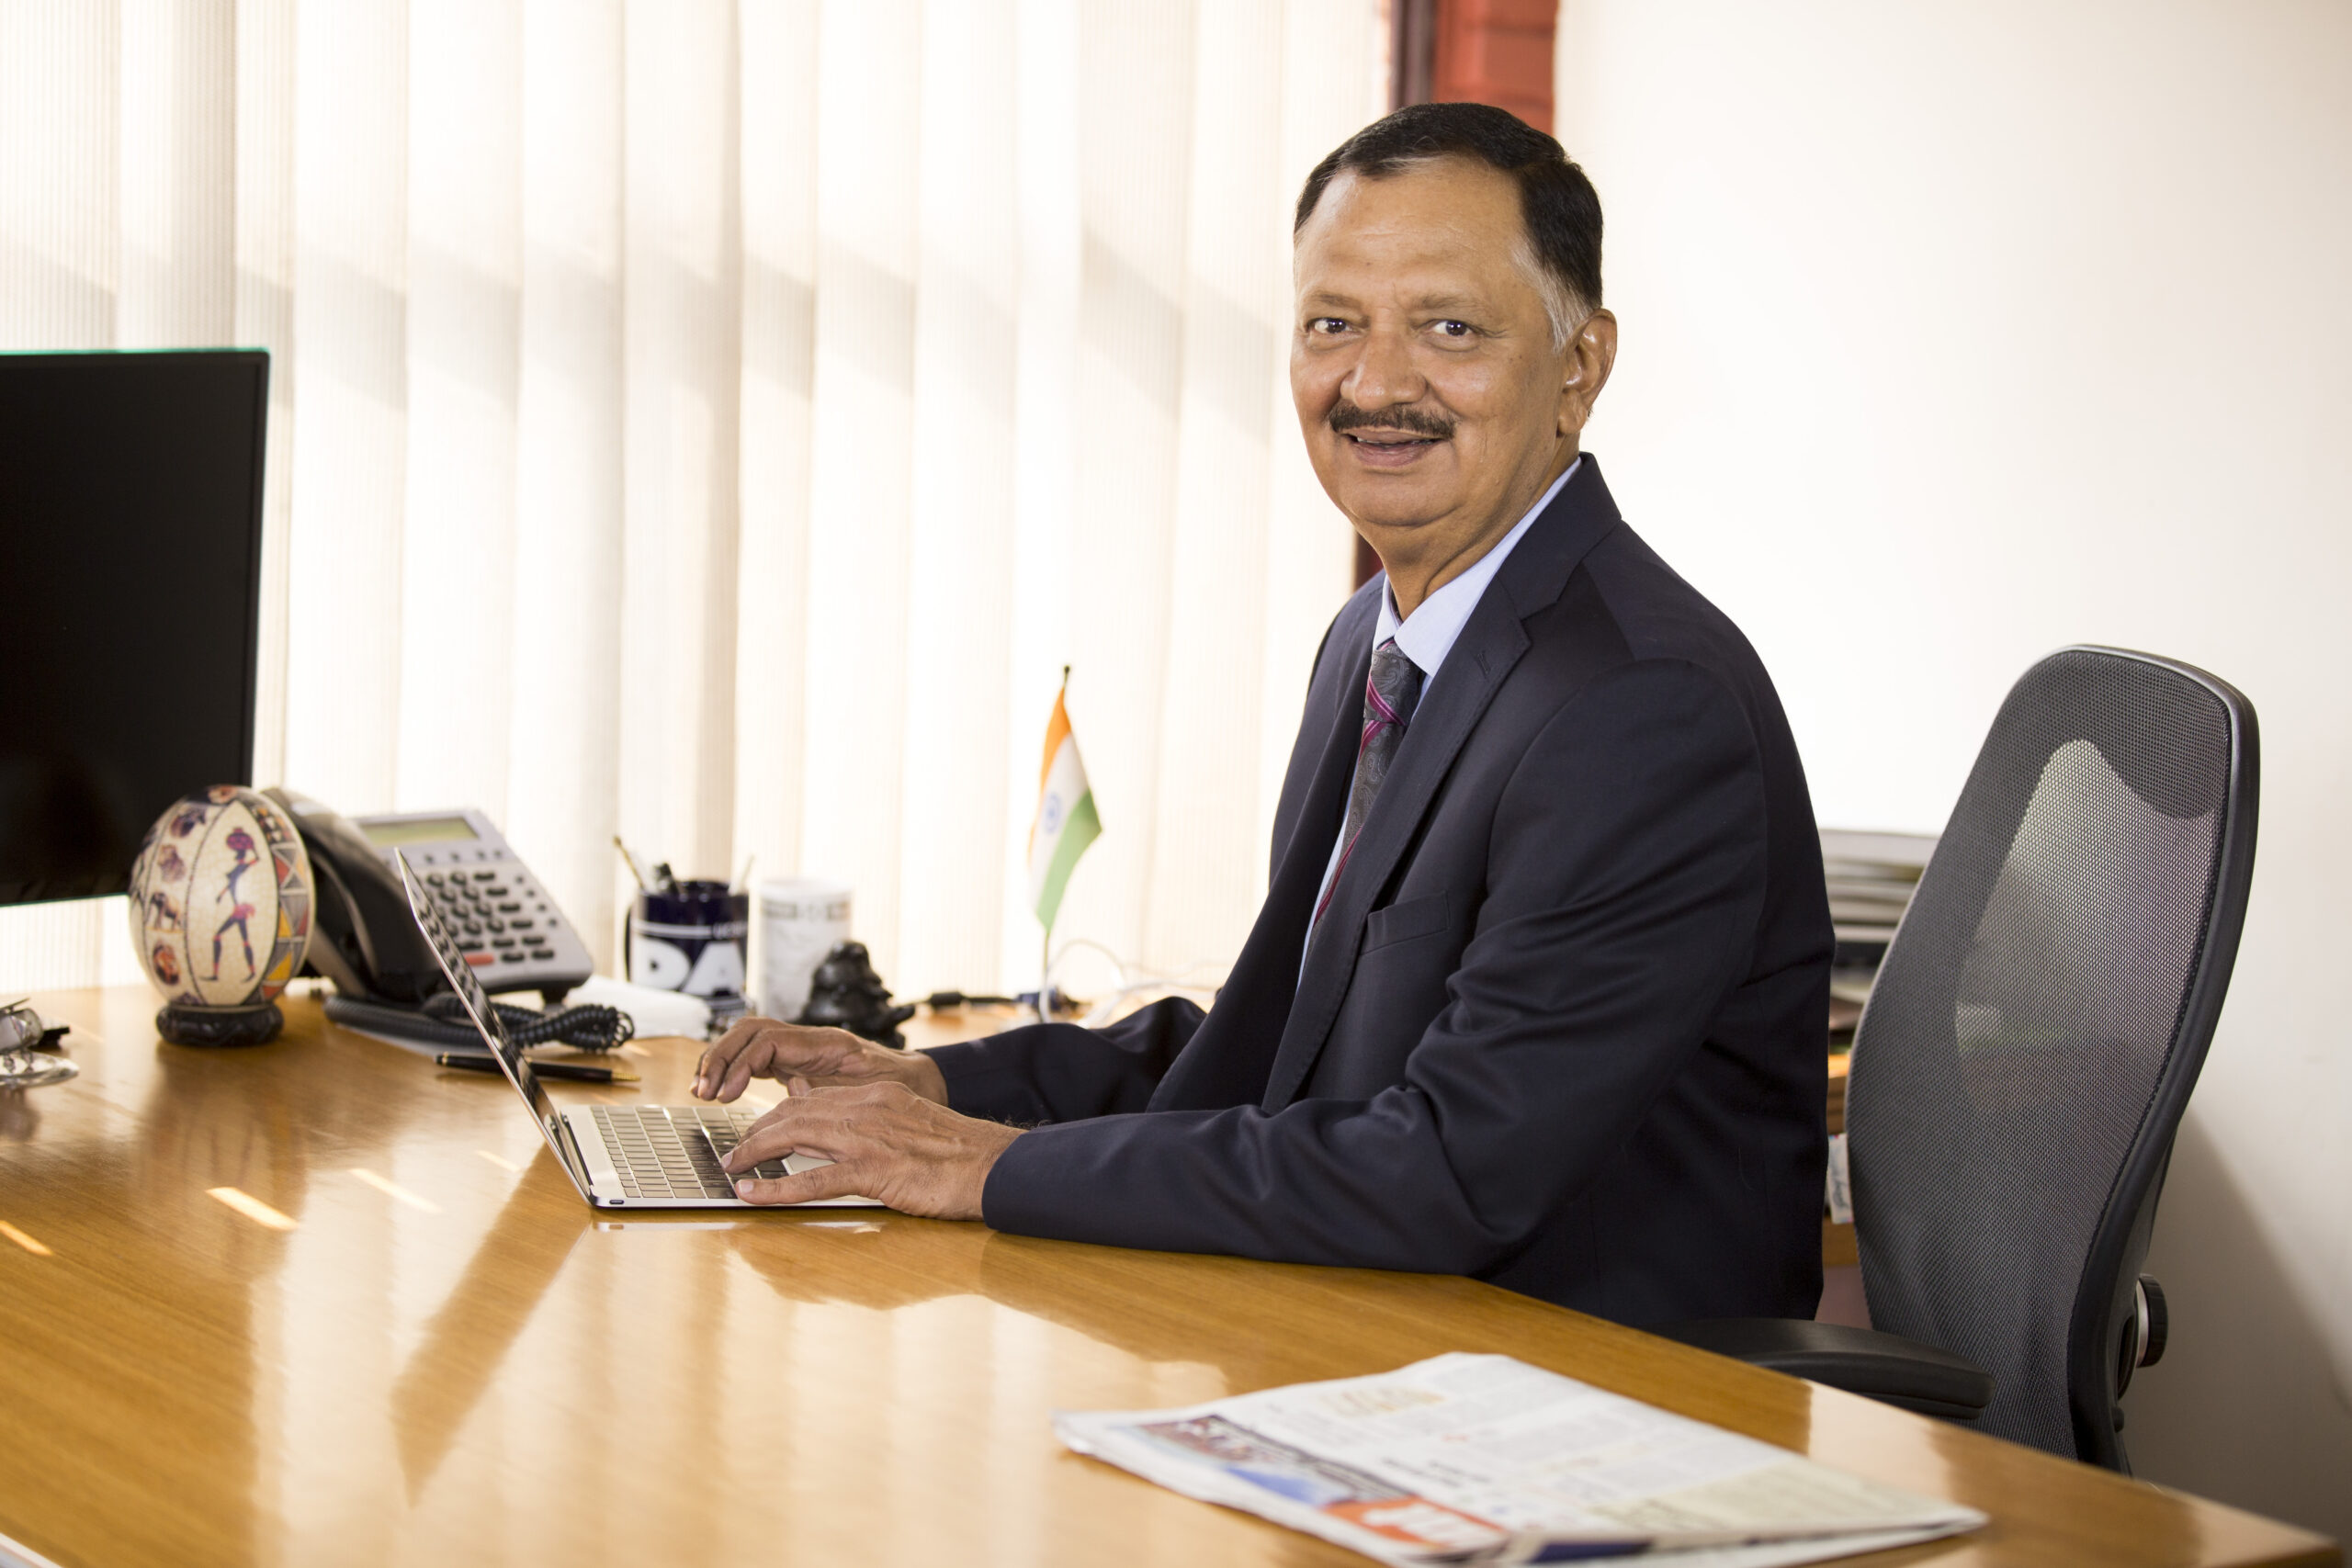 NEWGEN SOFTWARE: A Pioneer in Indian Software Industry Crosses Rs. 1,000 Crore Milestone